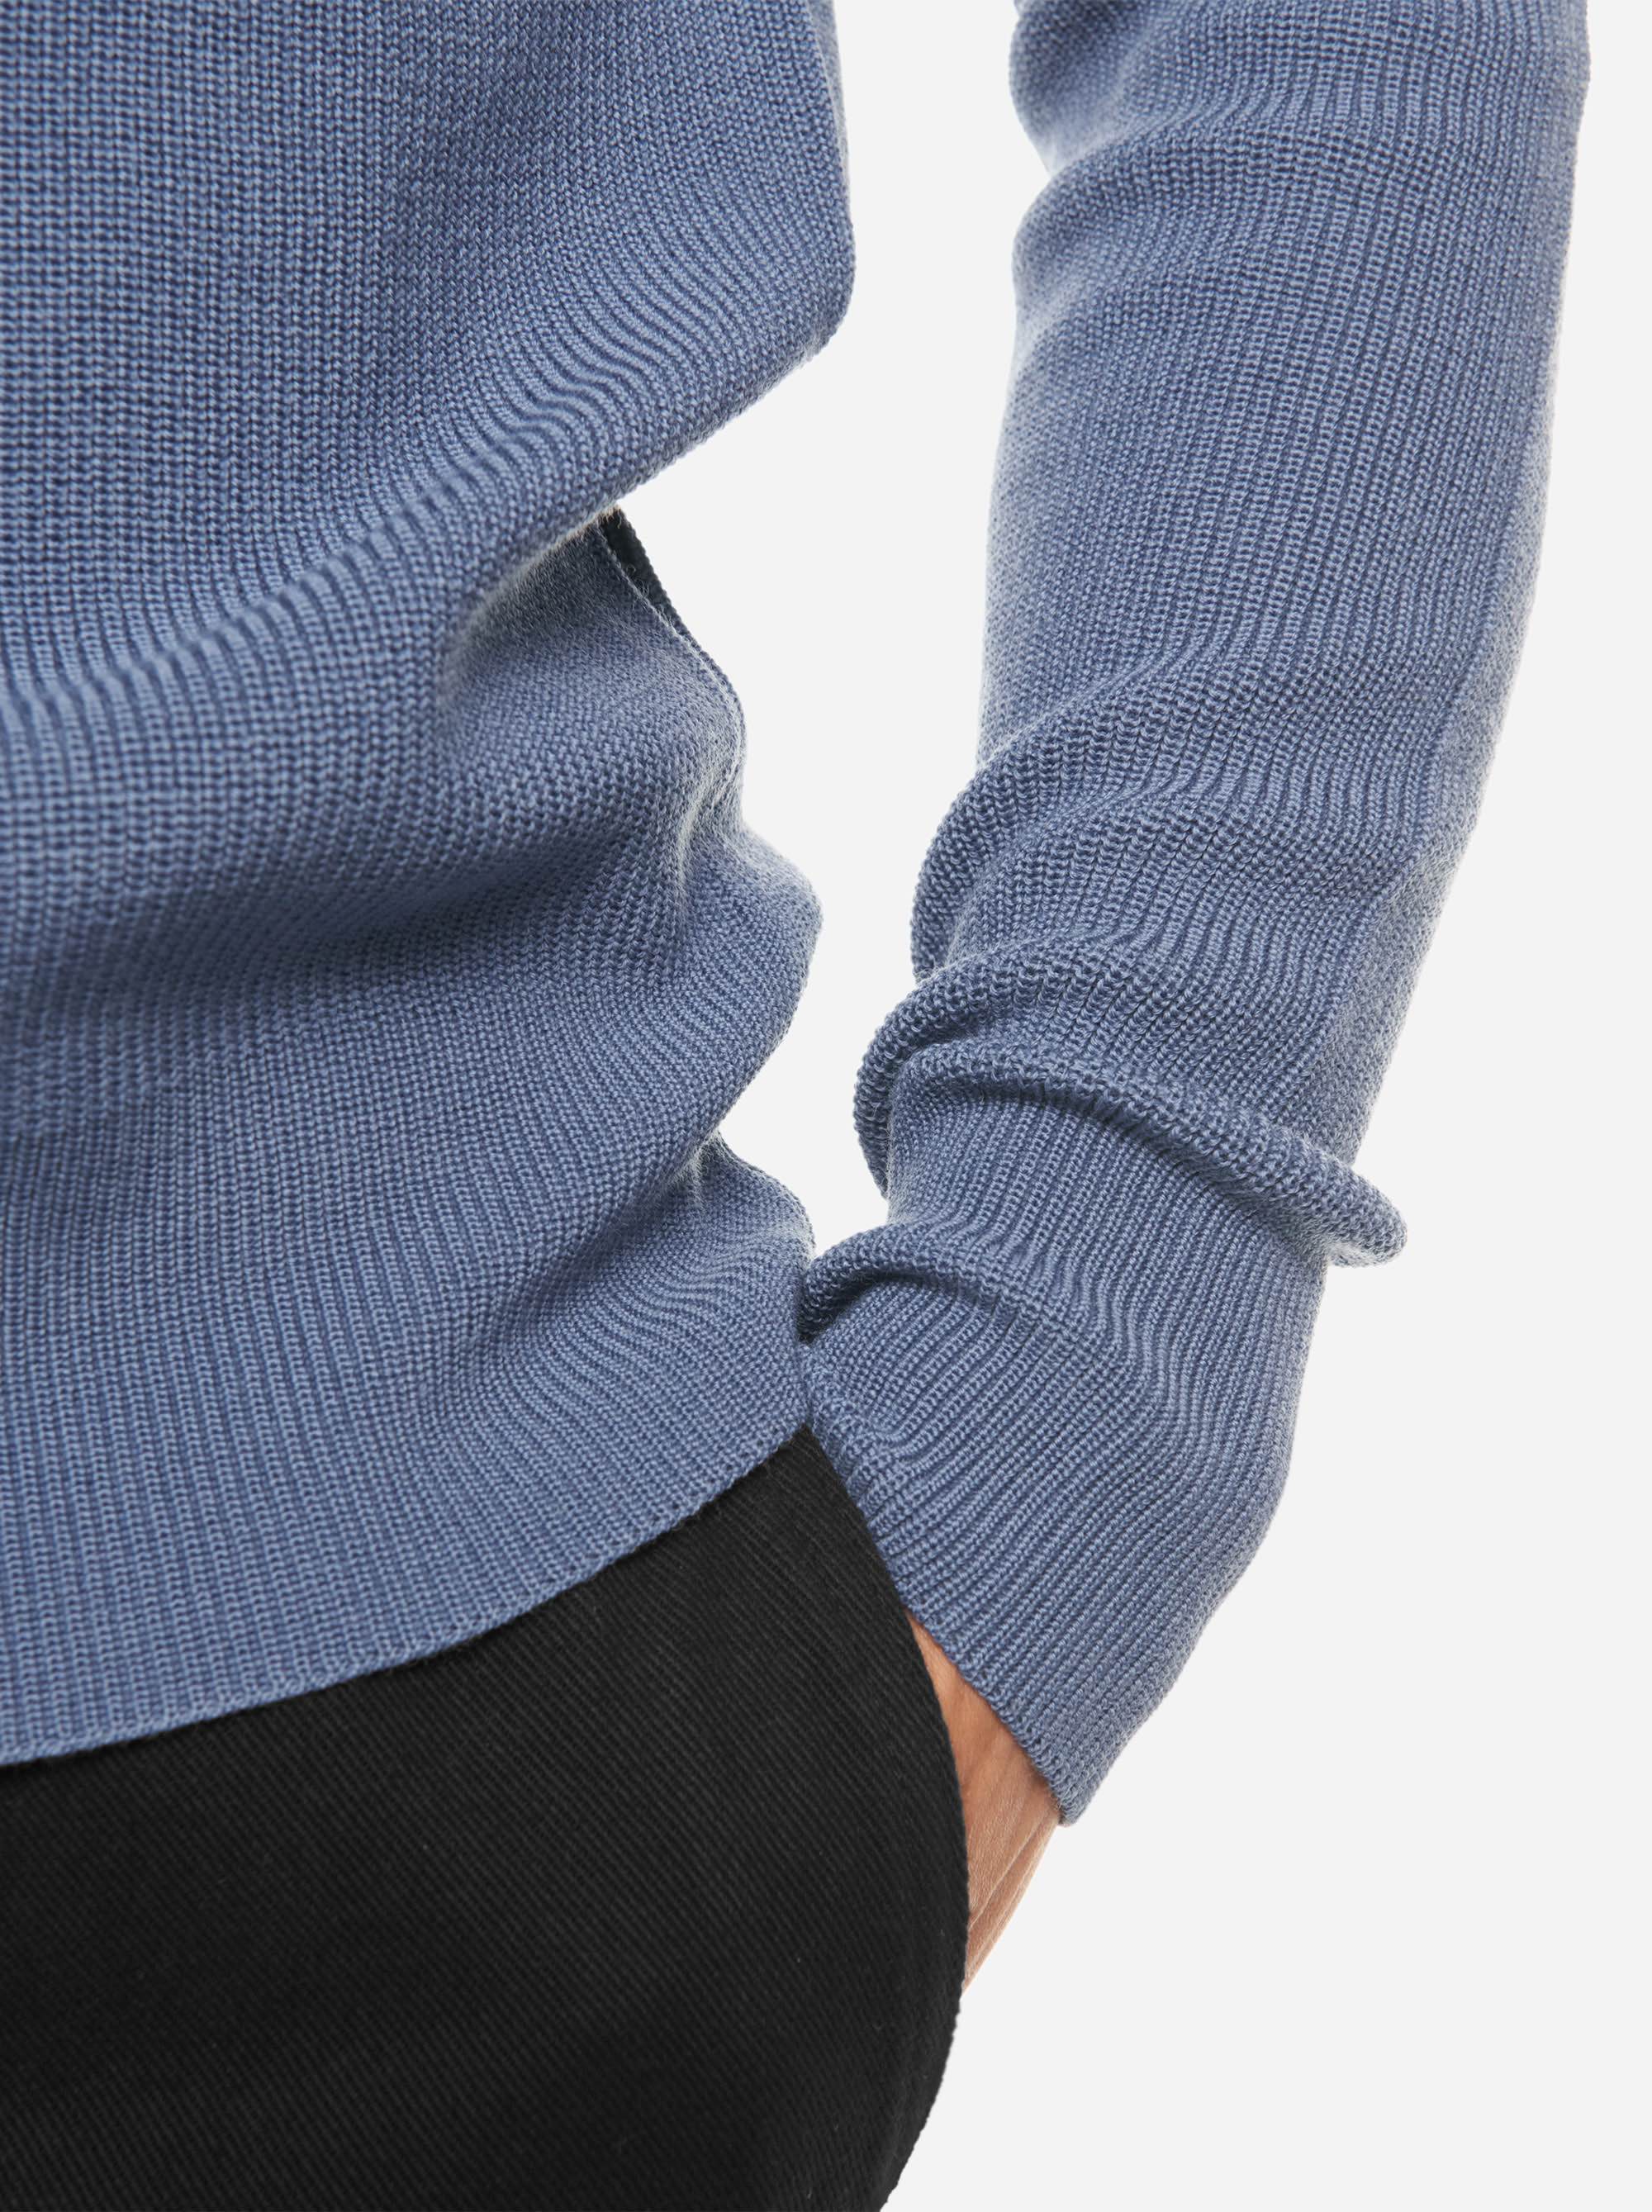 Teym - The Merino Sweater - Men - Sky blue - 4